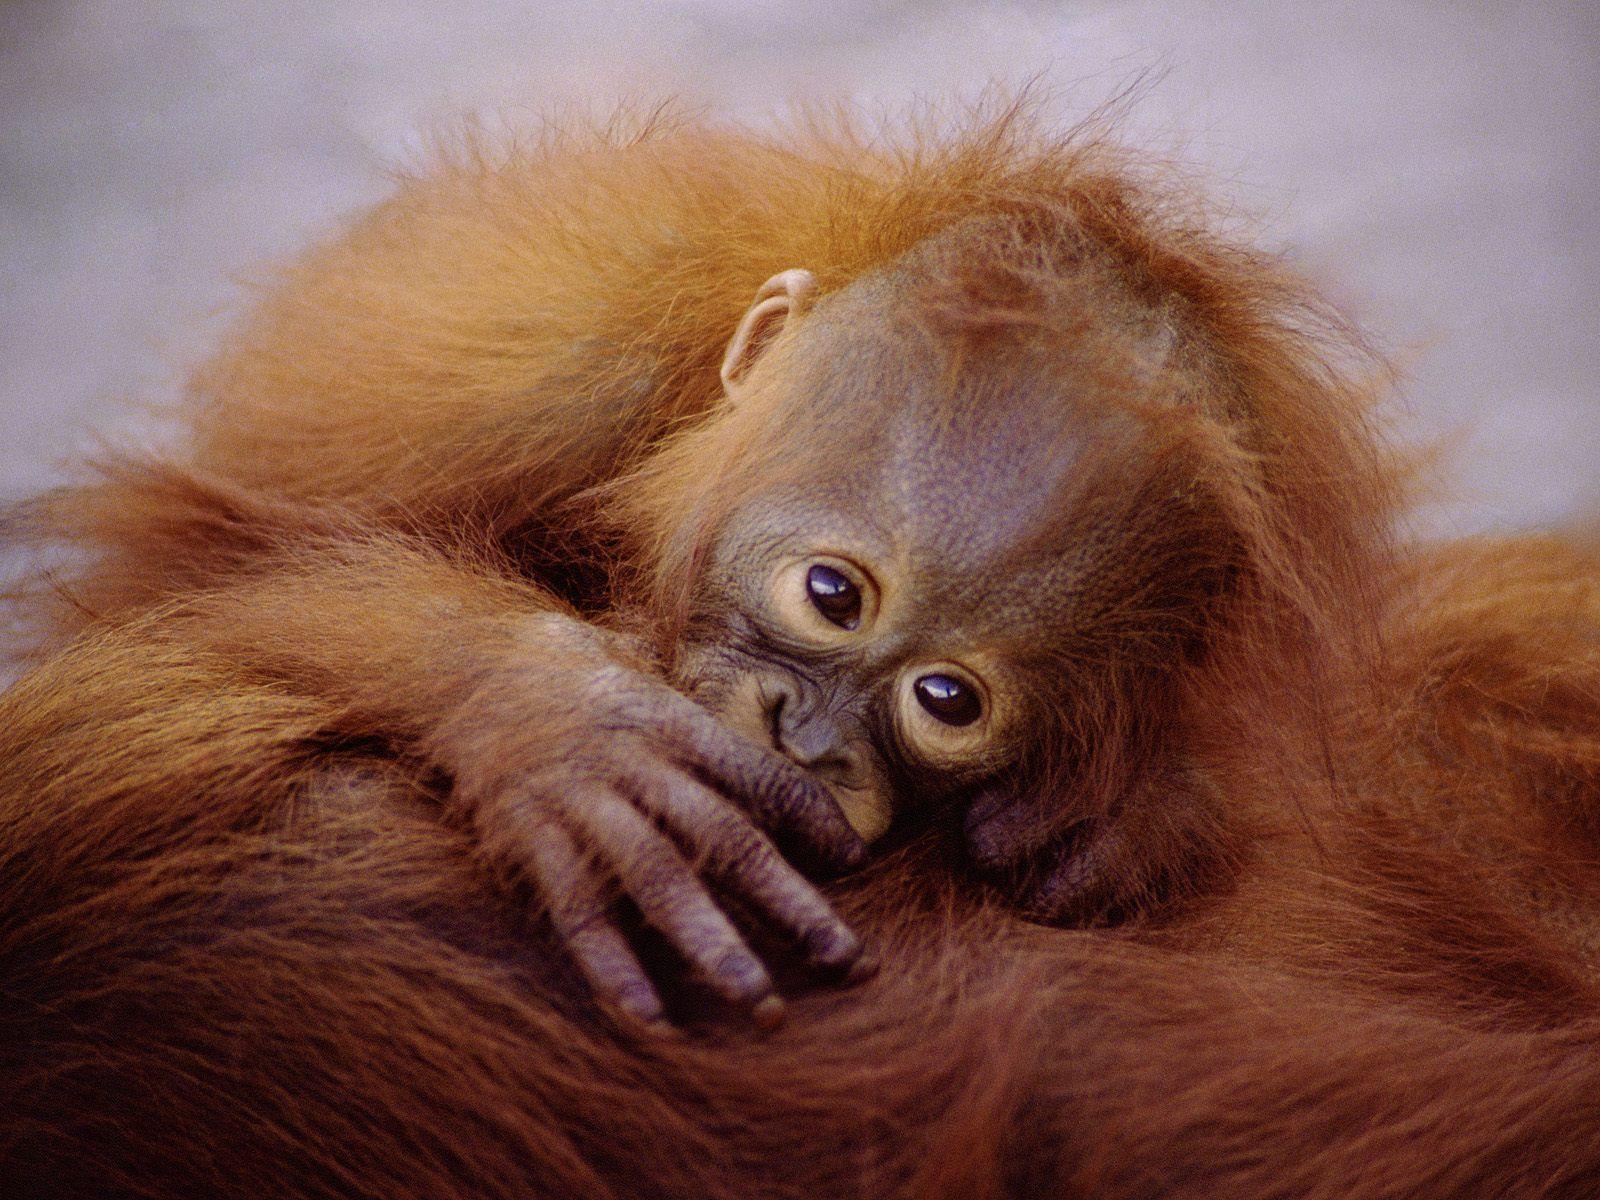 Baby Orangutan Wallpaper Image & Picture